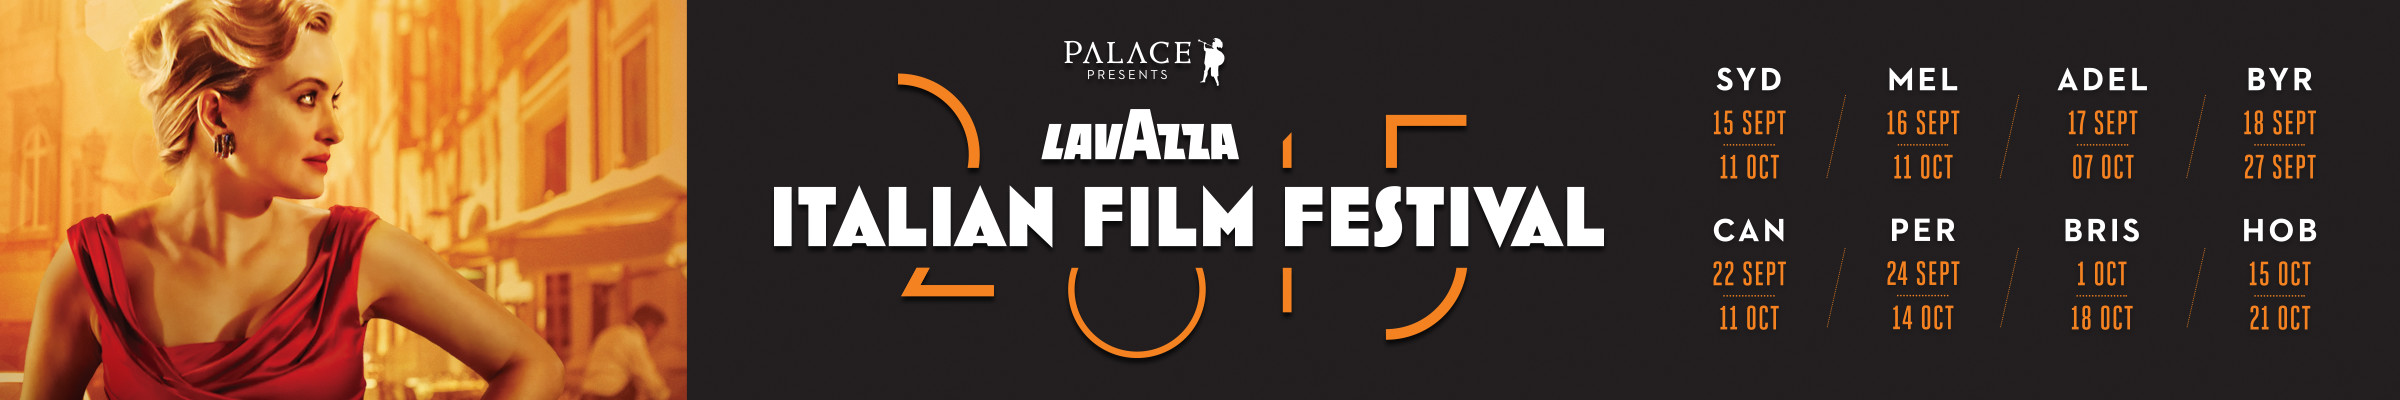 Palace presents the Lavazza Italian Film Festival 2015